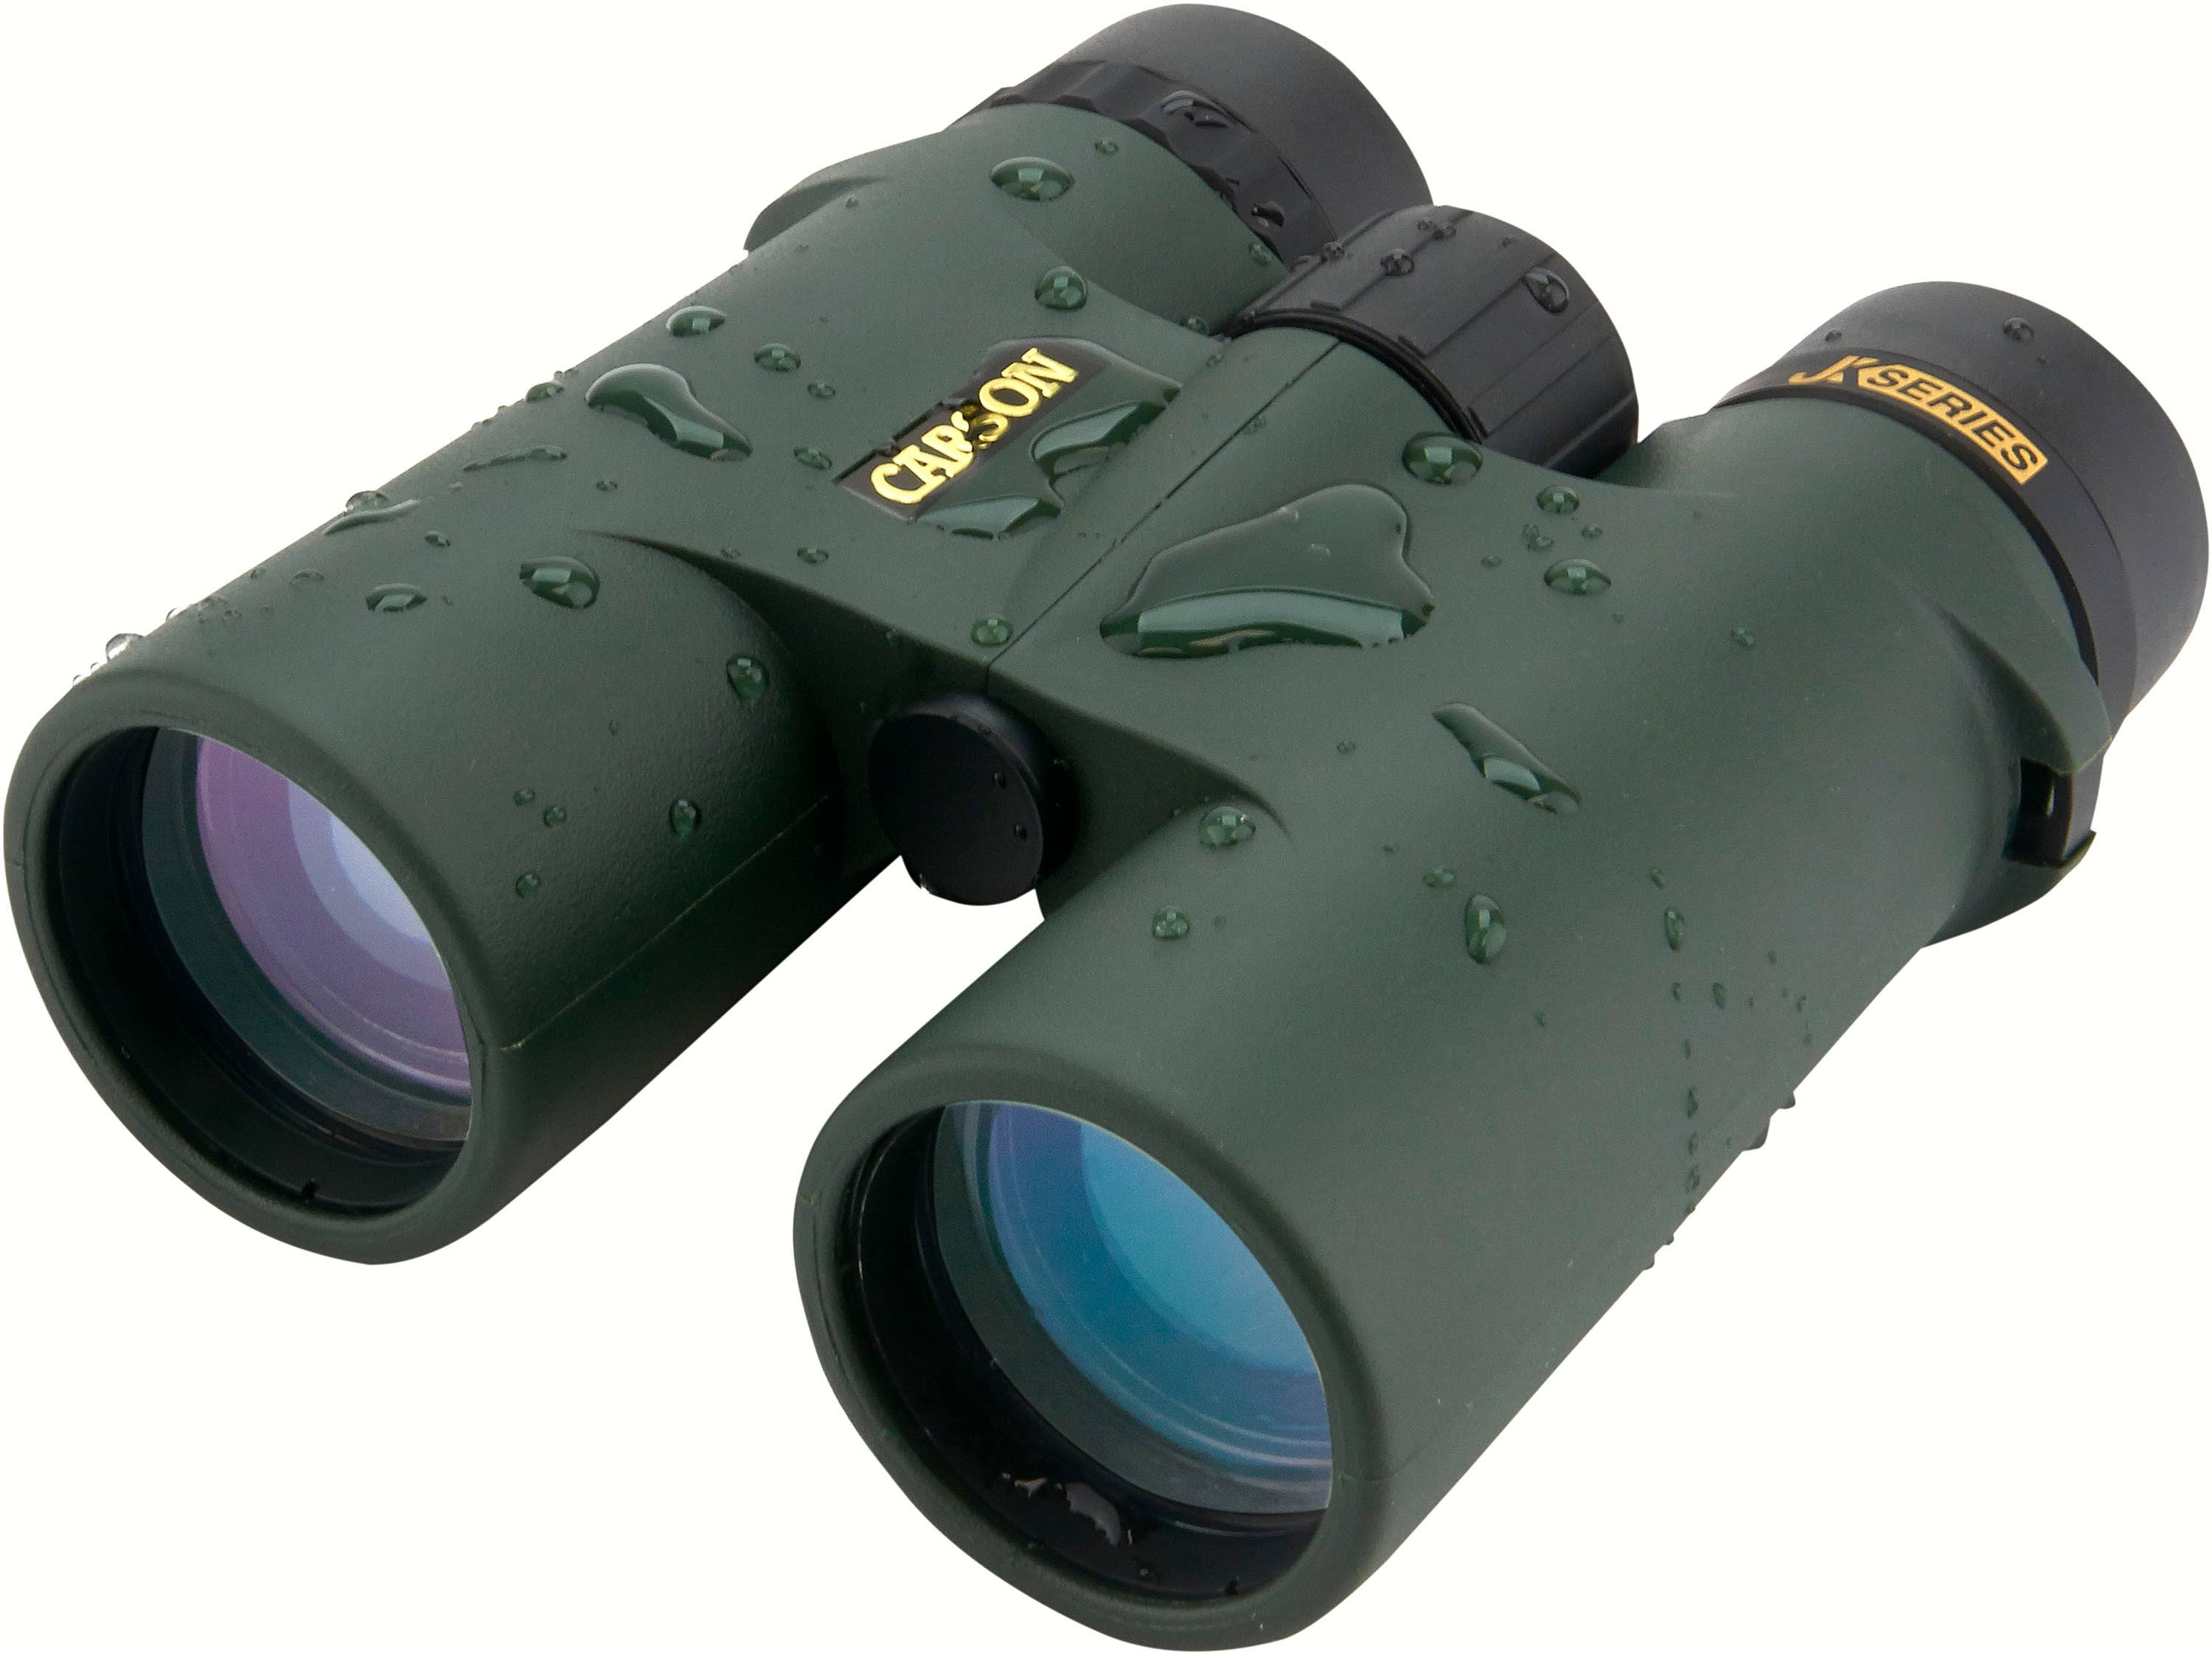 Carson Jk042 JK Series Close Focus Waterproof Binocular